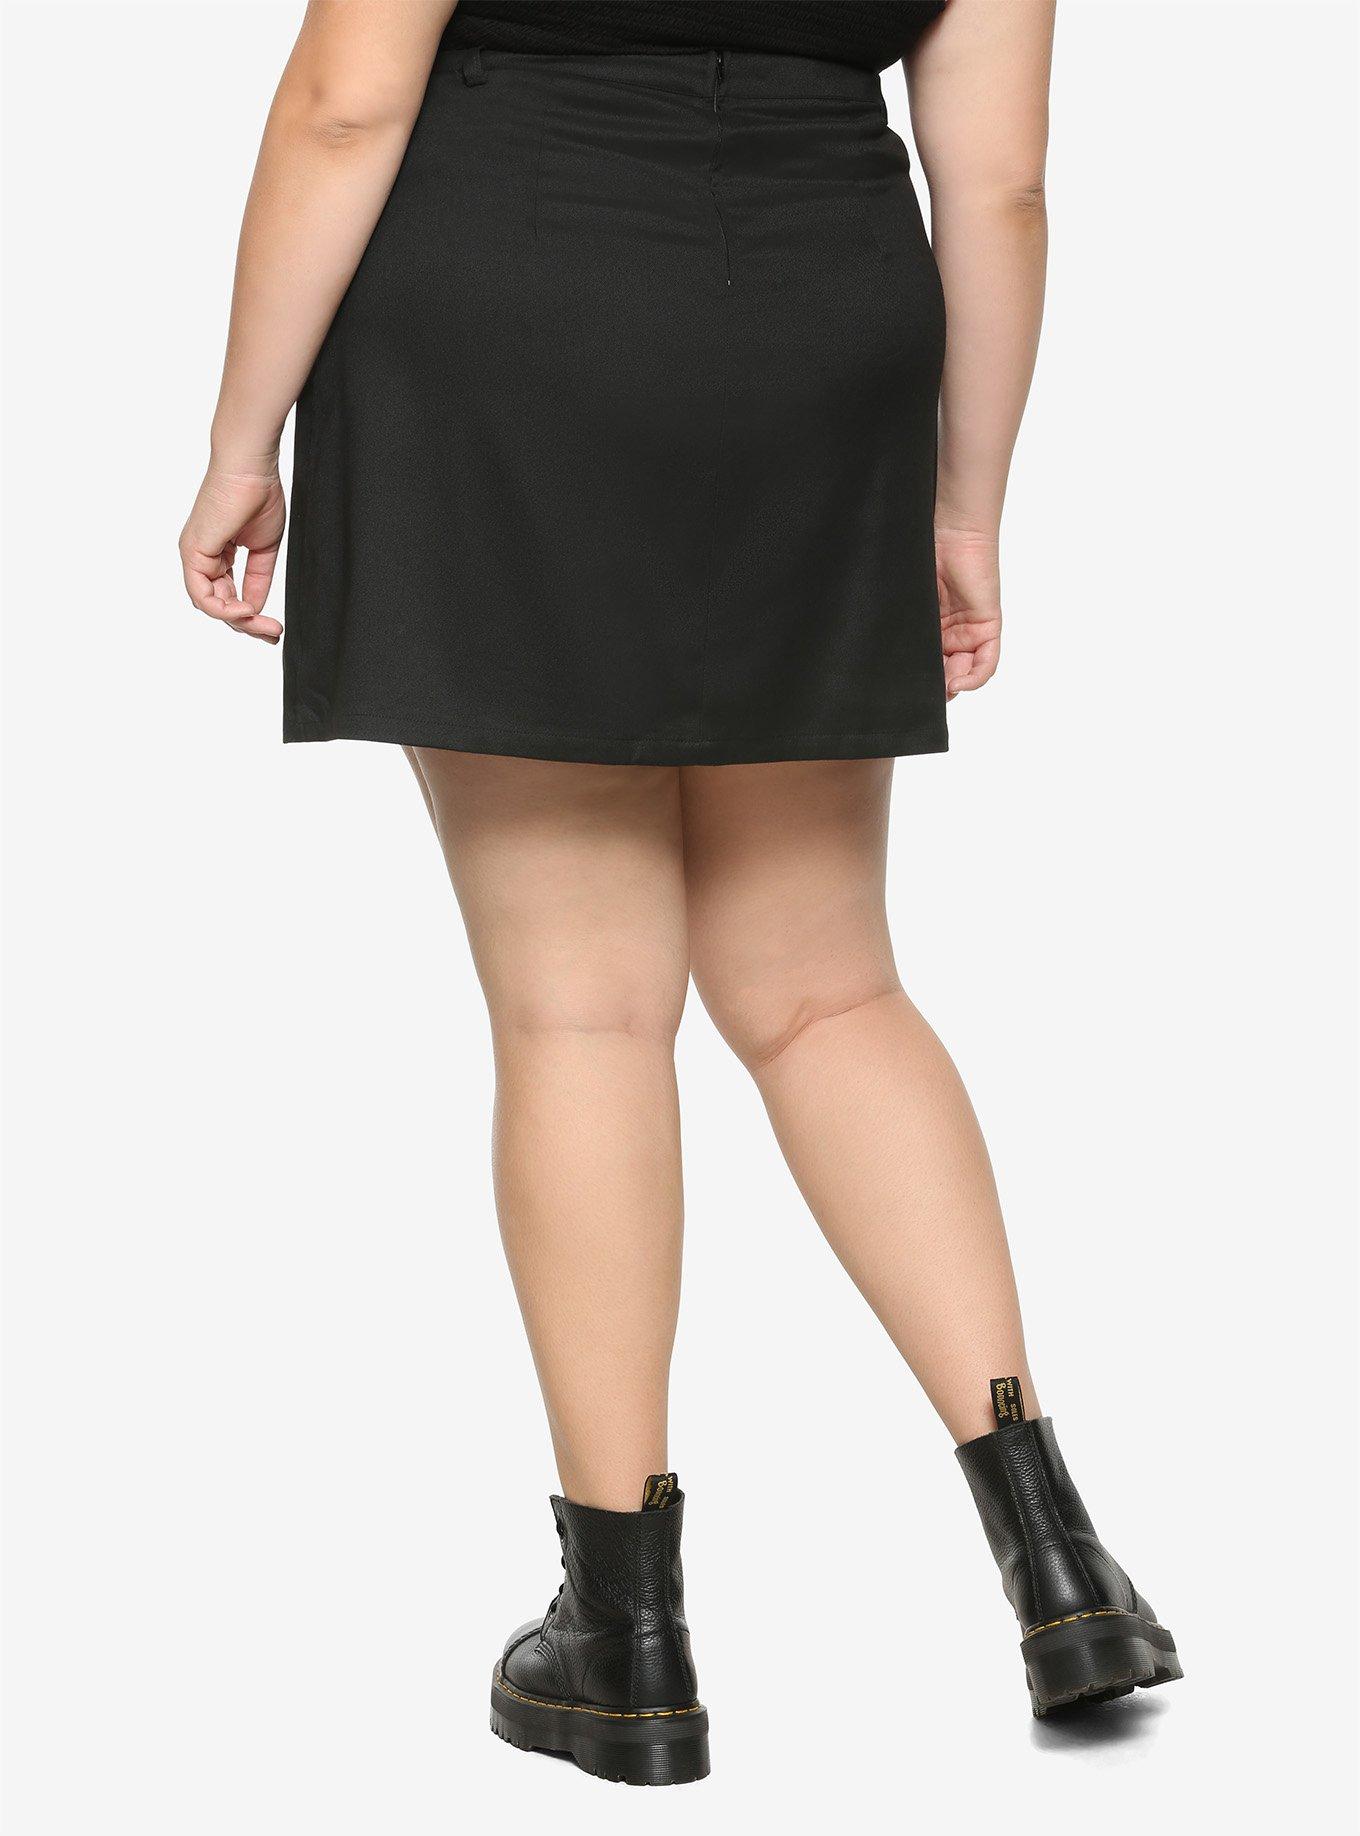 Black Double Chain Mini Skirt Plus Size, BLACK, alternate